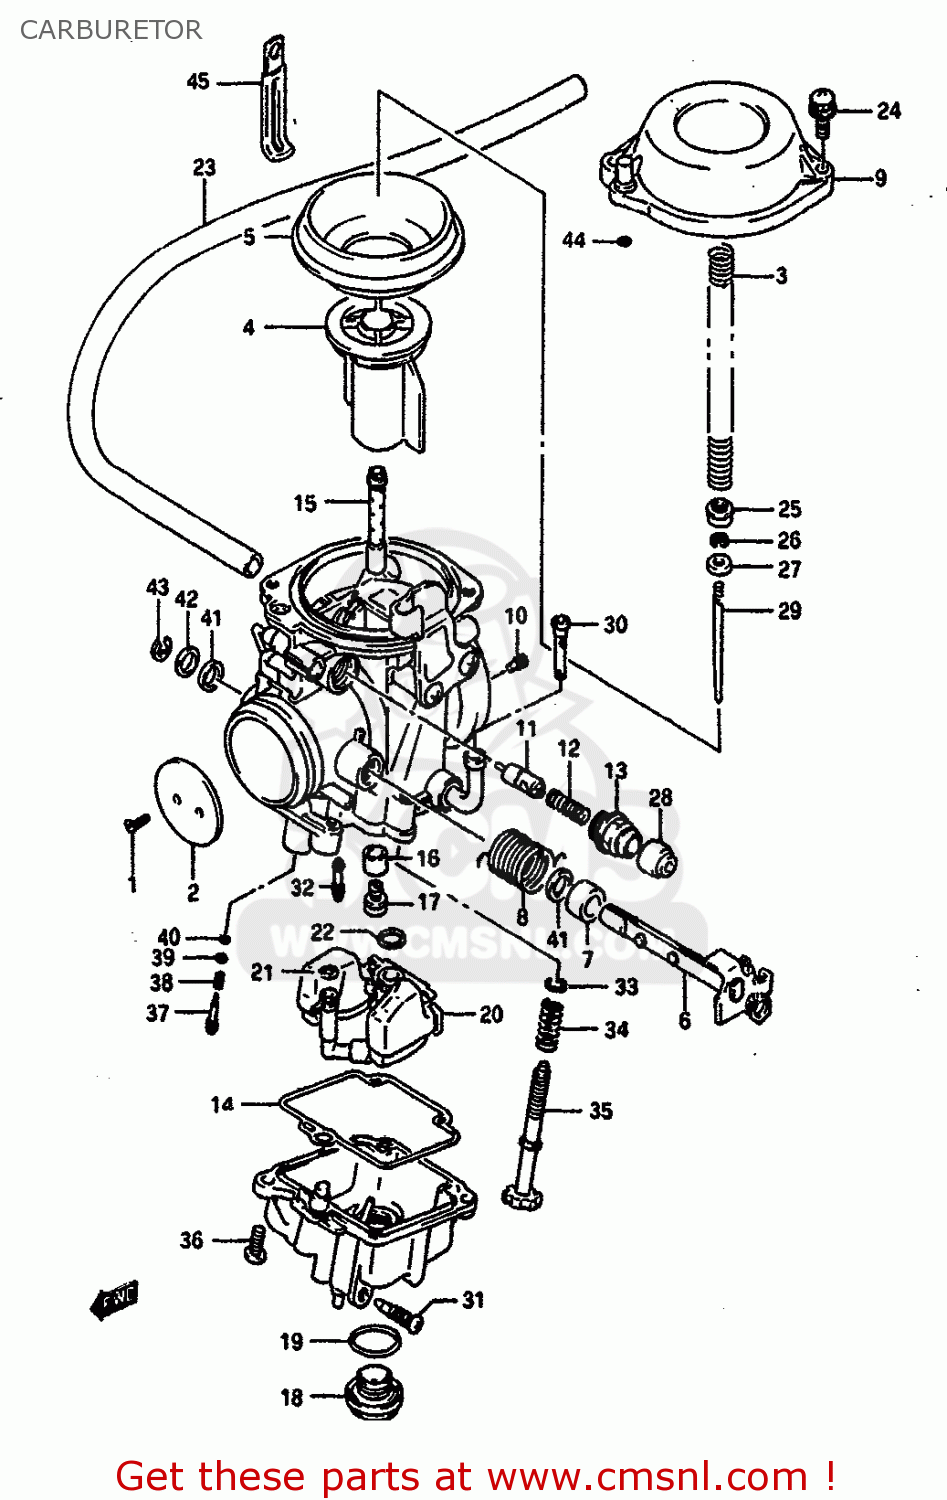 dr650 wiring diagram